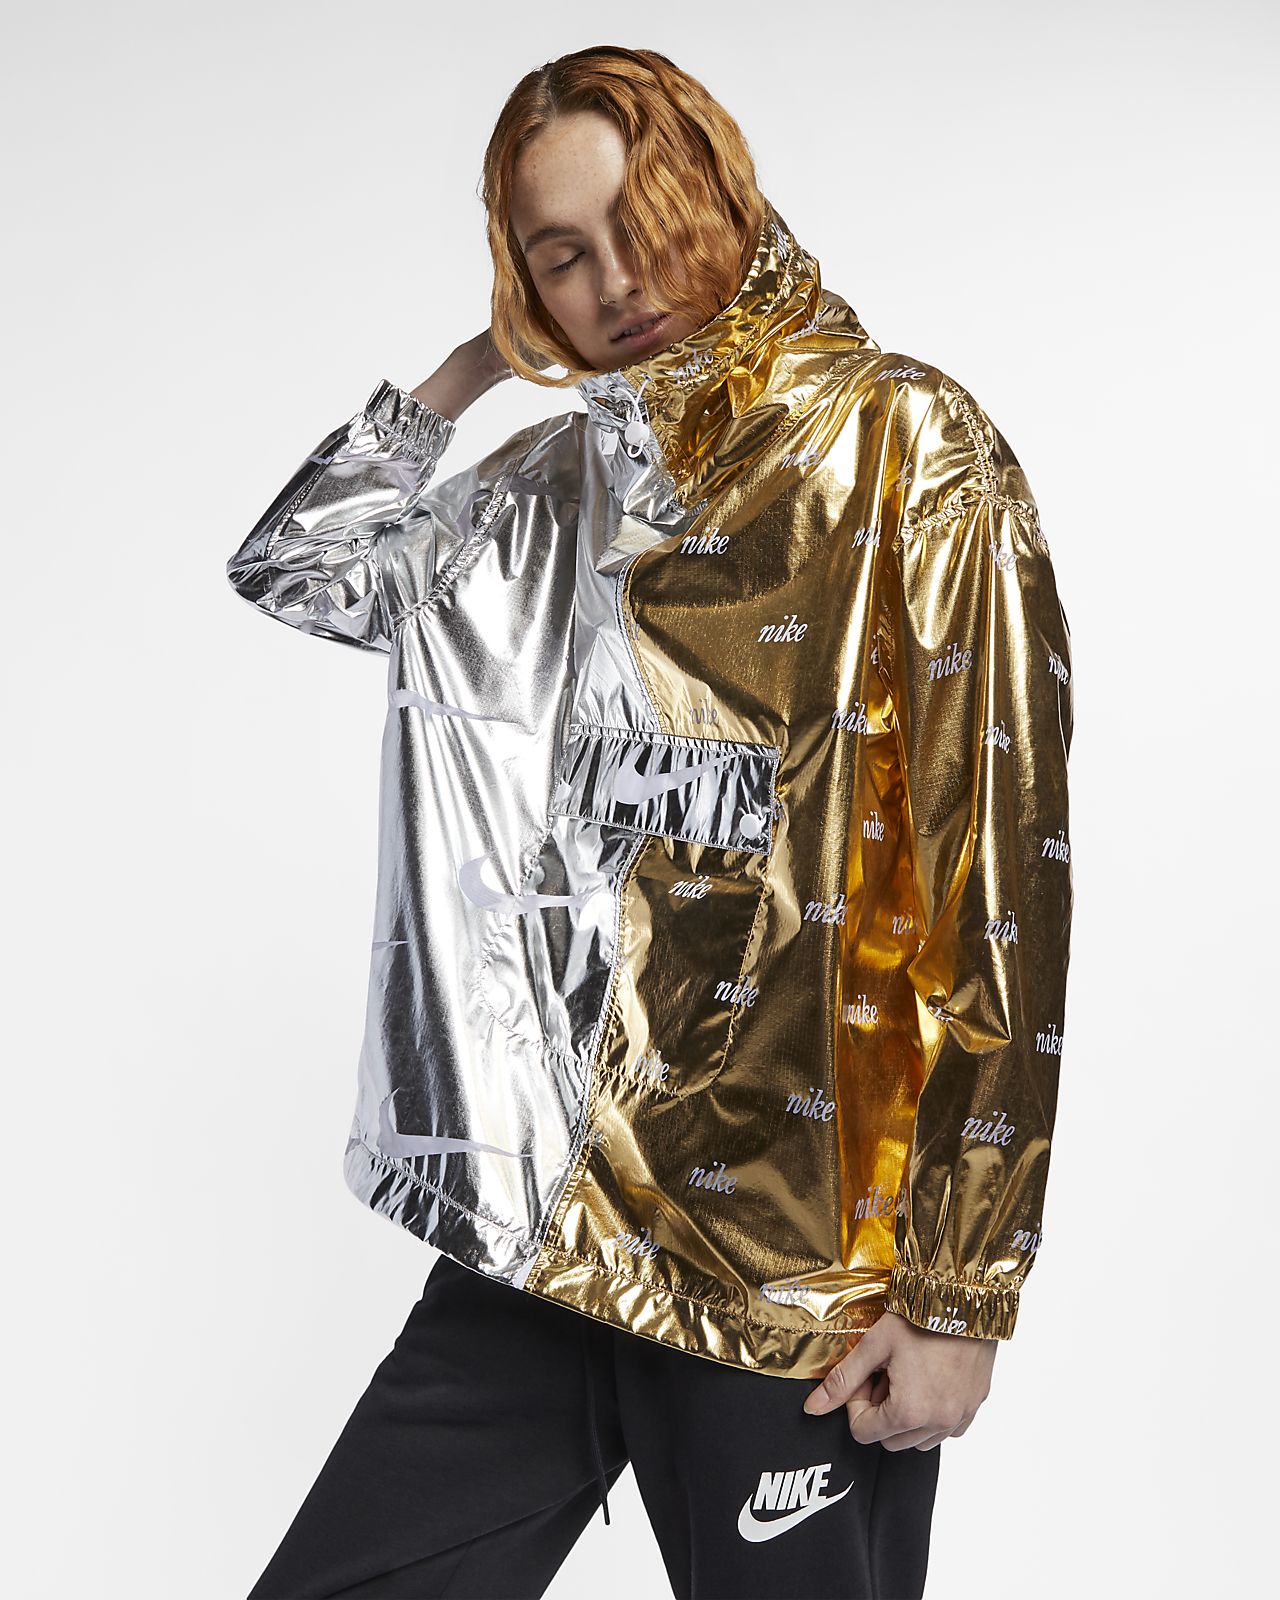 metallic jacket nike Shop Clothing 